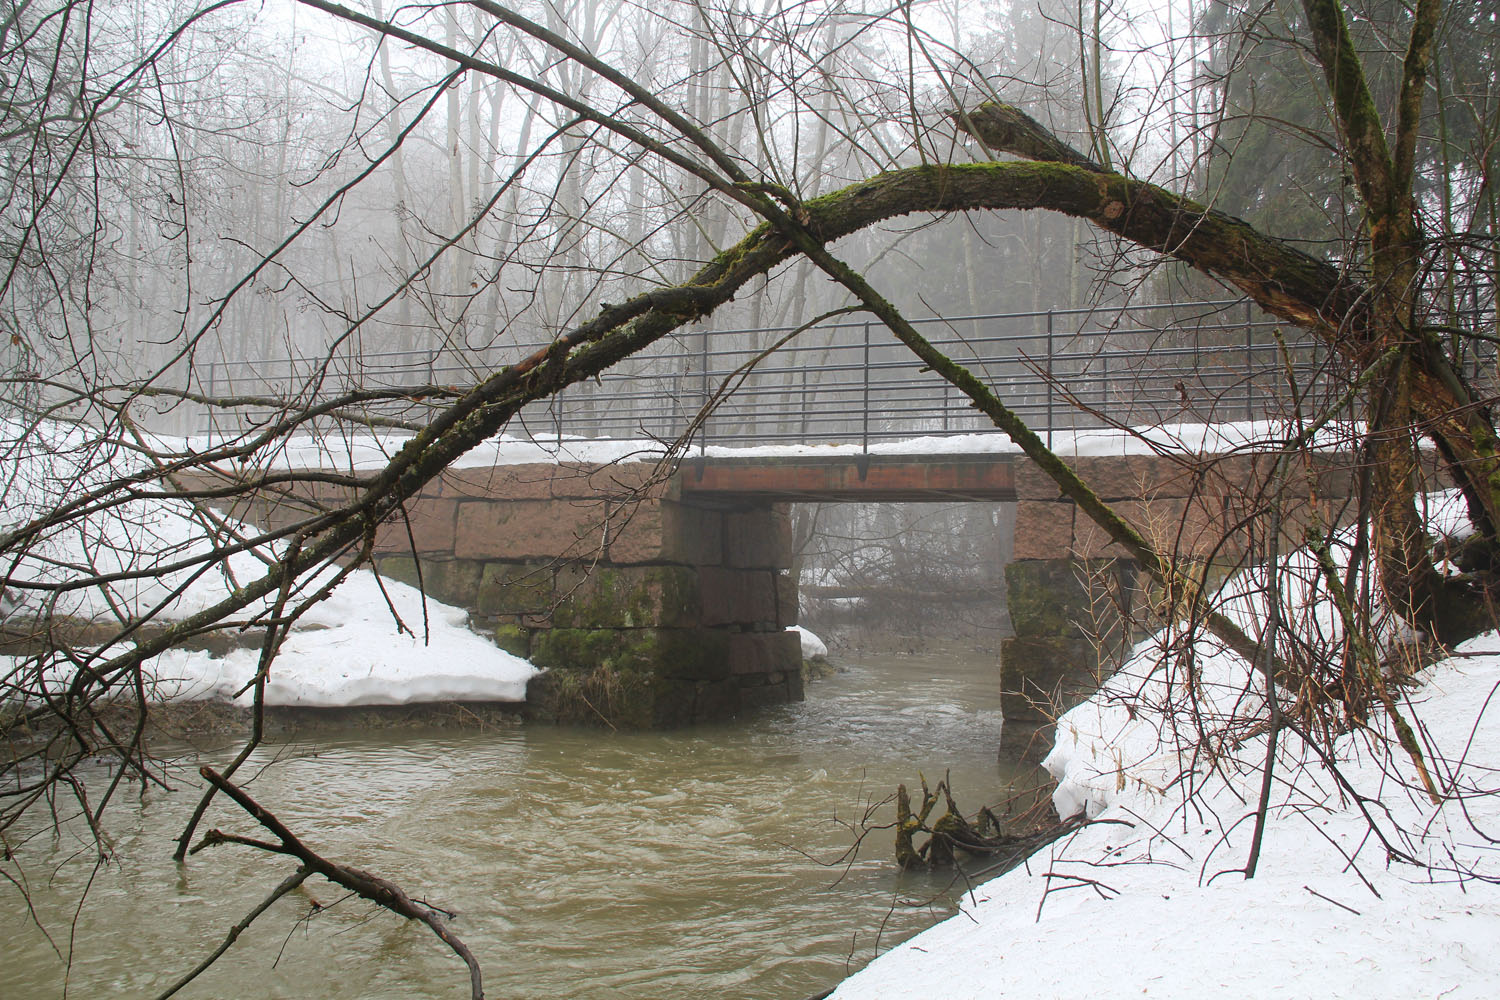 Ragna Hansens bro i Alnaparken, by Chell Hill via Wikimedia Commons